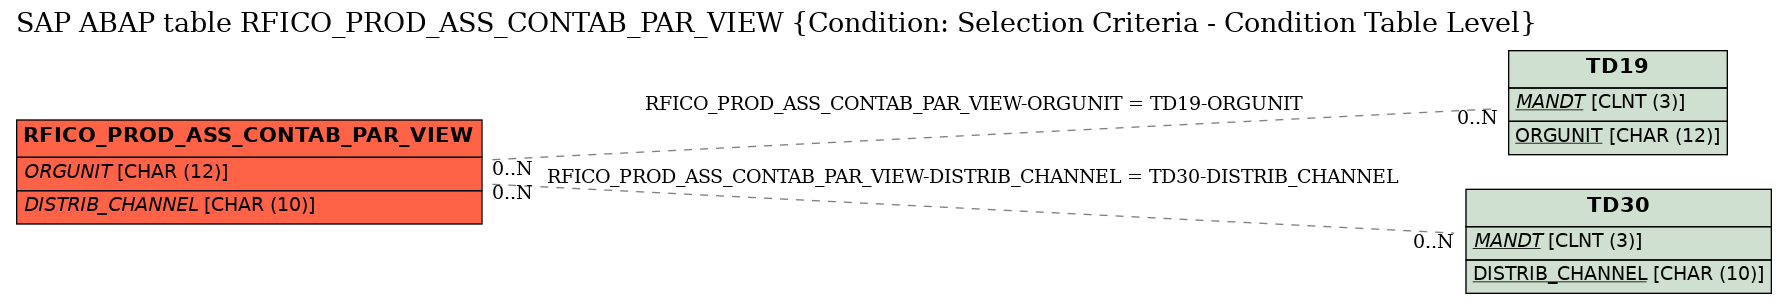 E-R Diagram for table RFICO_PROD_ASS_CONTAB_PAR_VIEW (Condition: Selection Criteria - Condition Table Level)